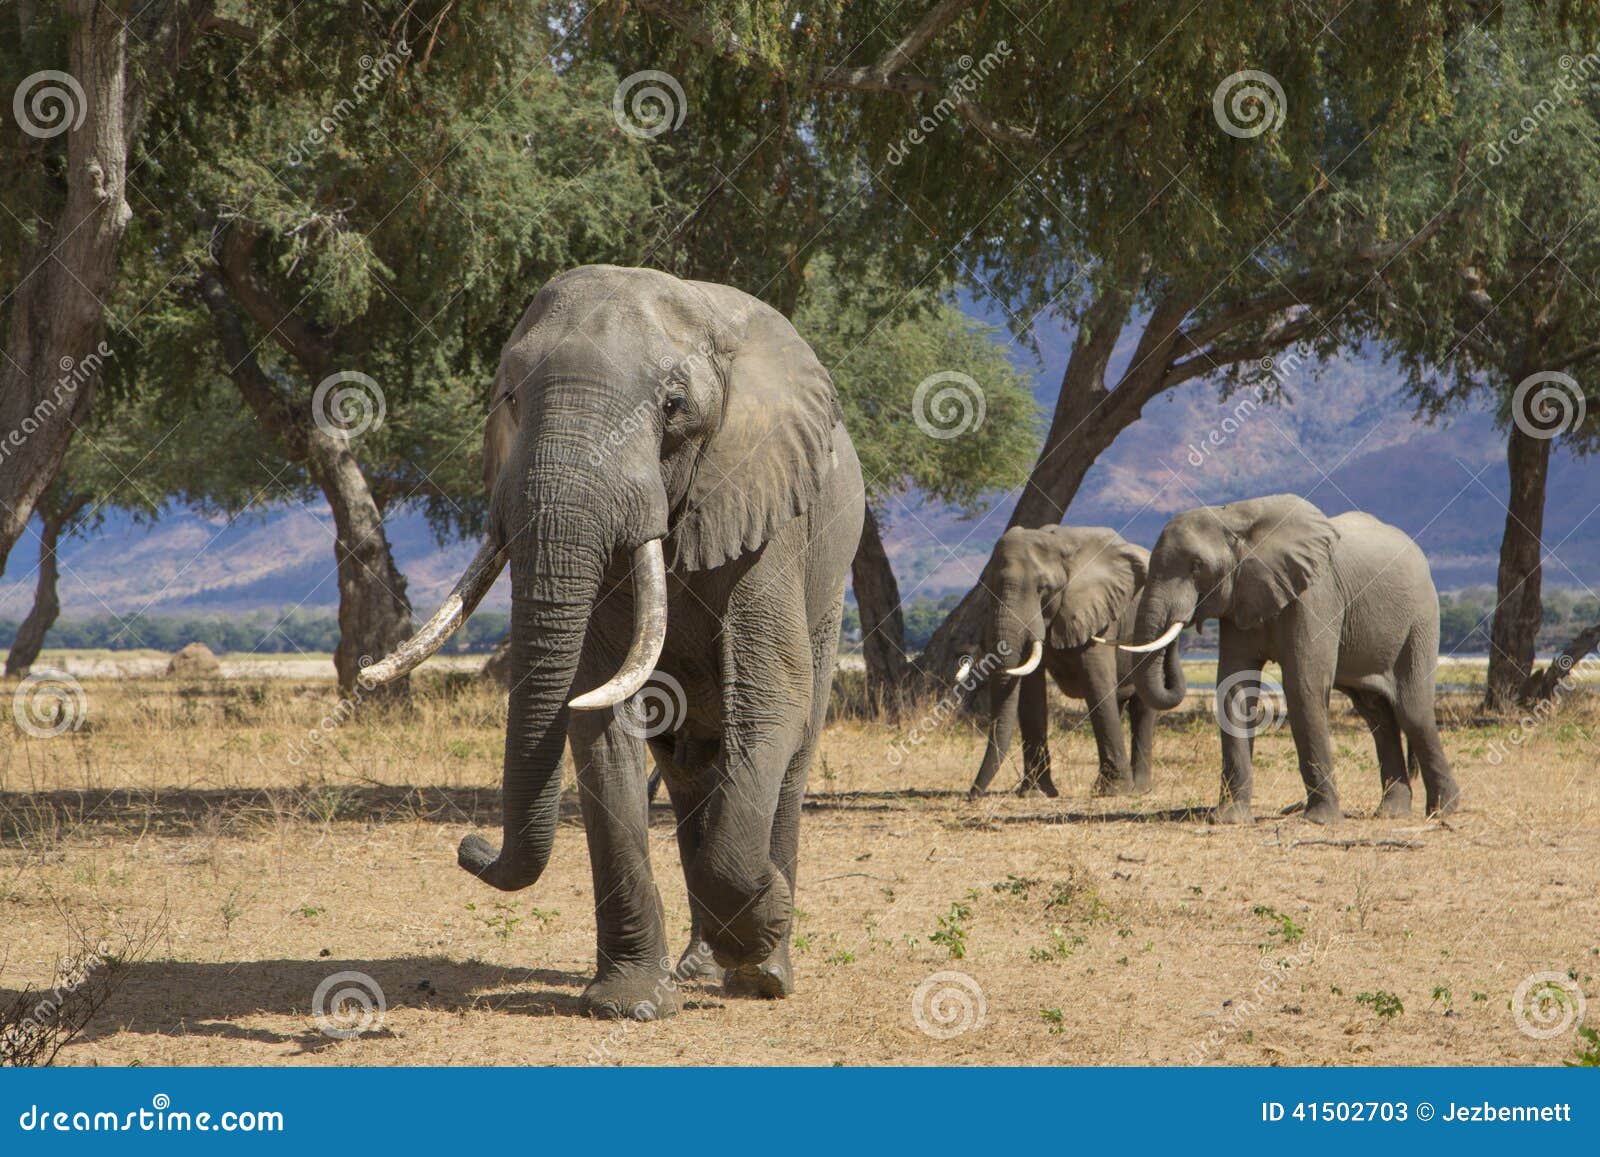 zambezi giants